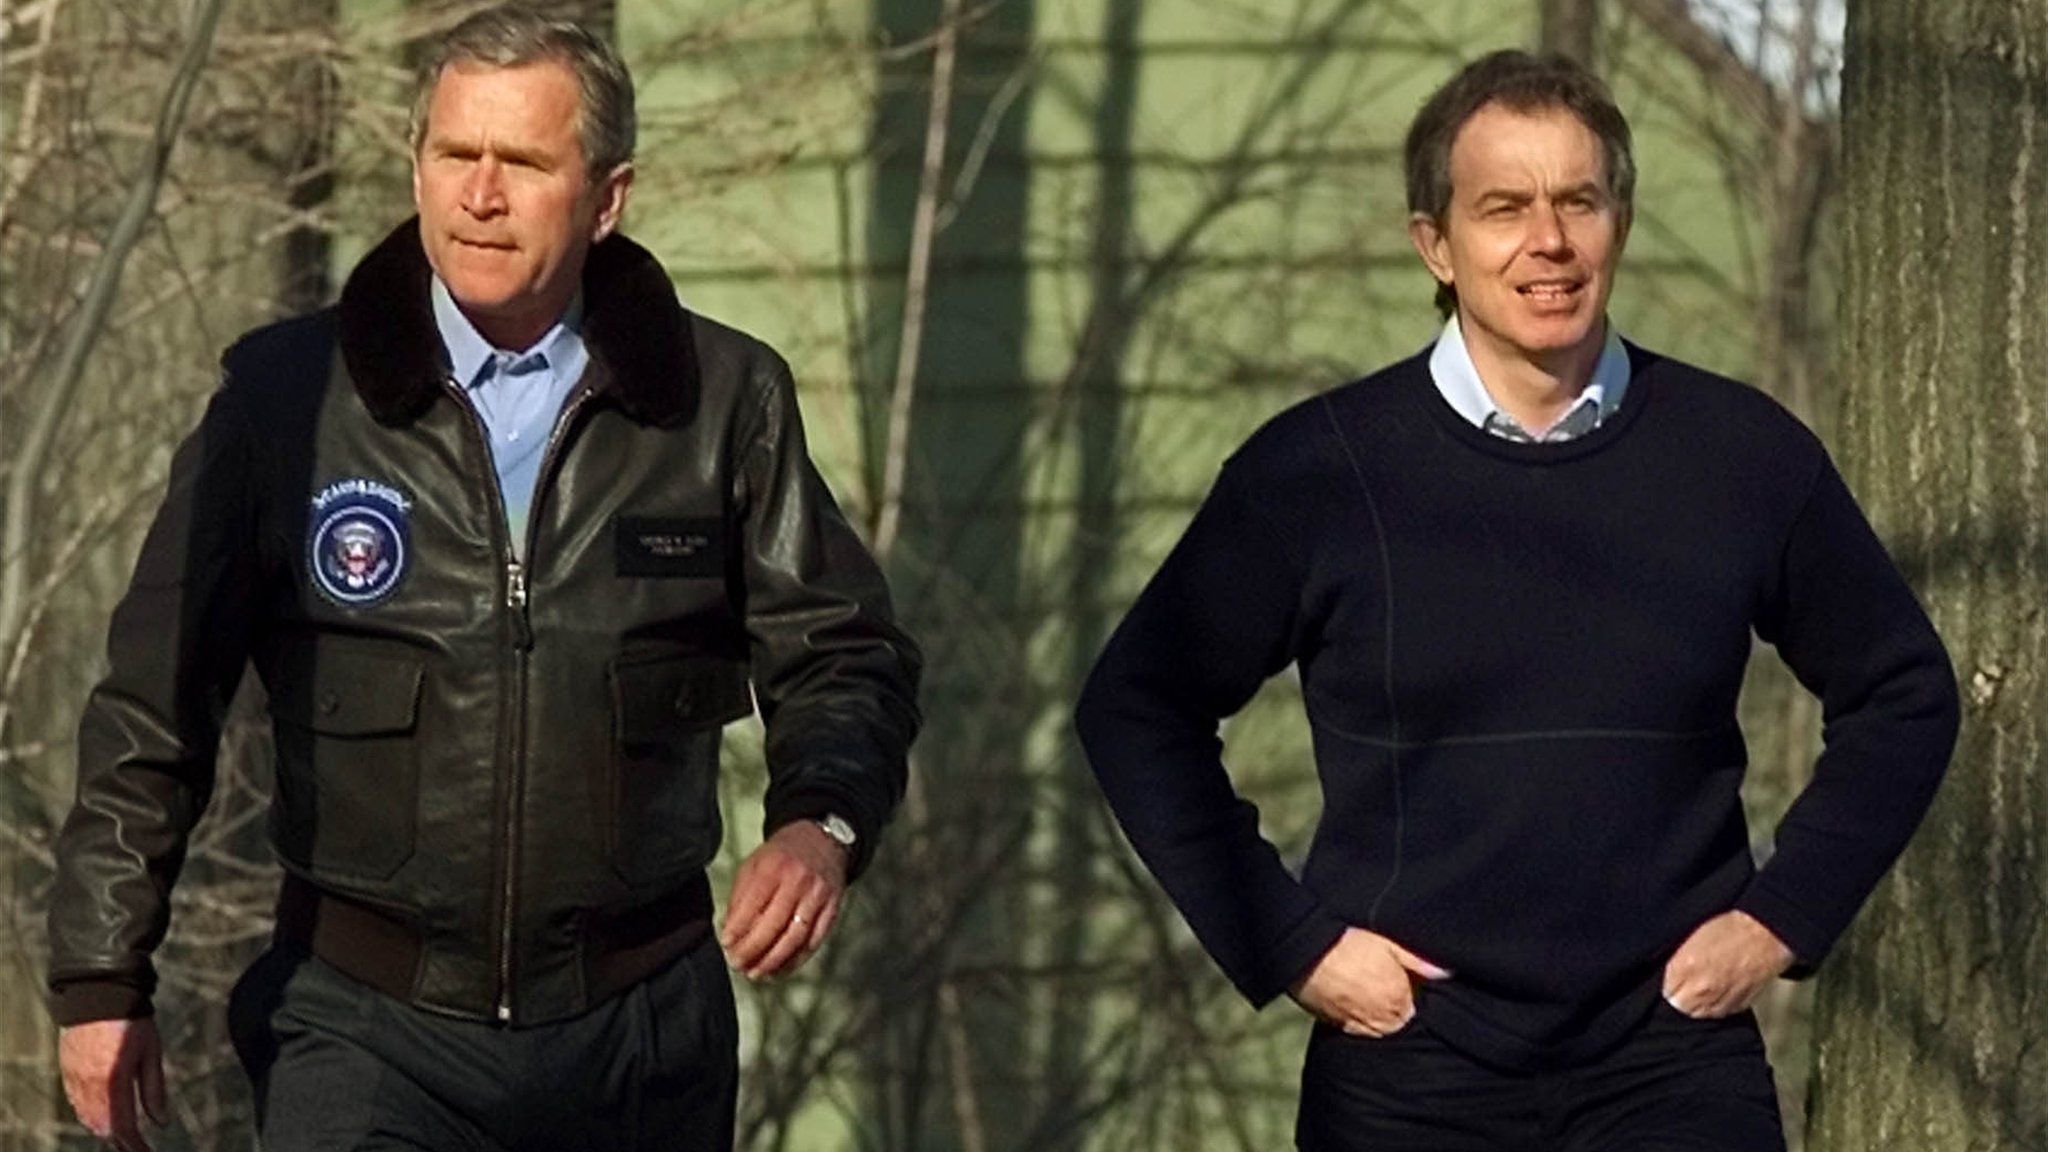 George W Bush and Tony Blair in 2001